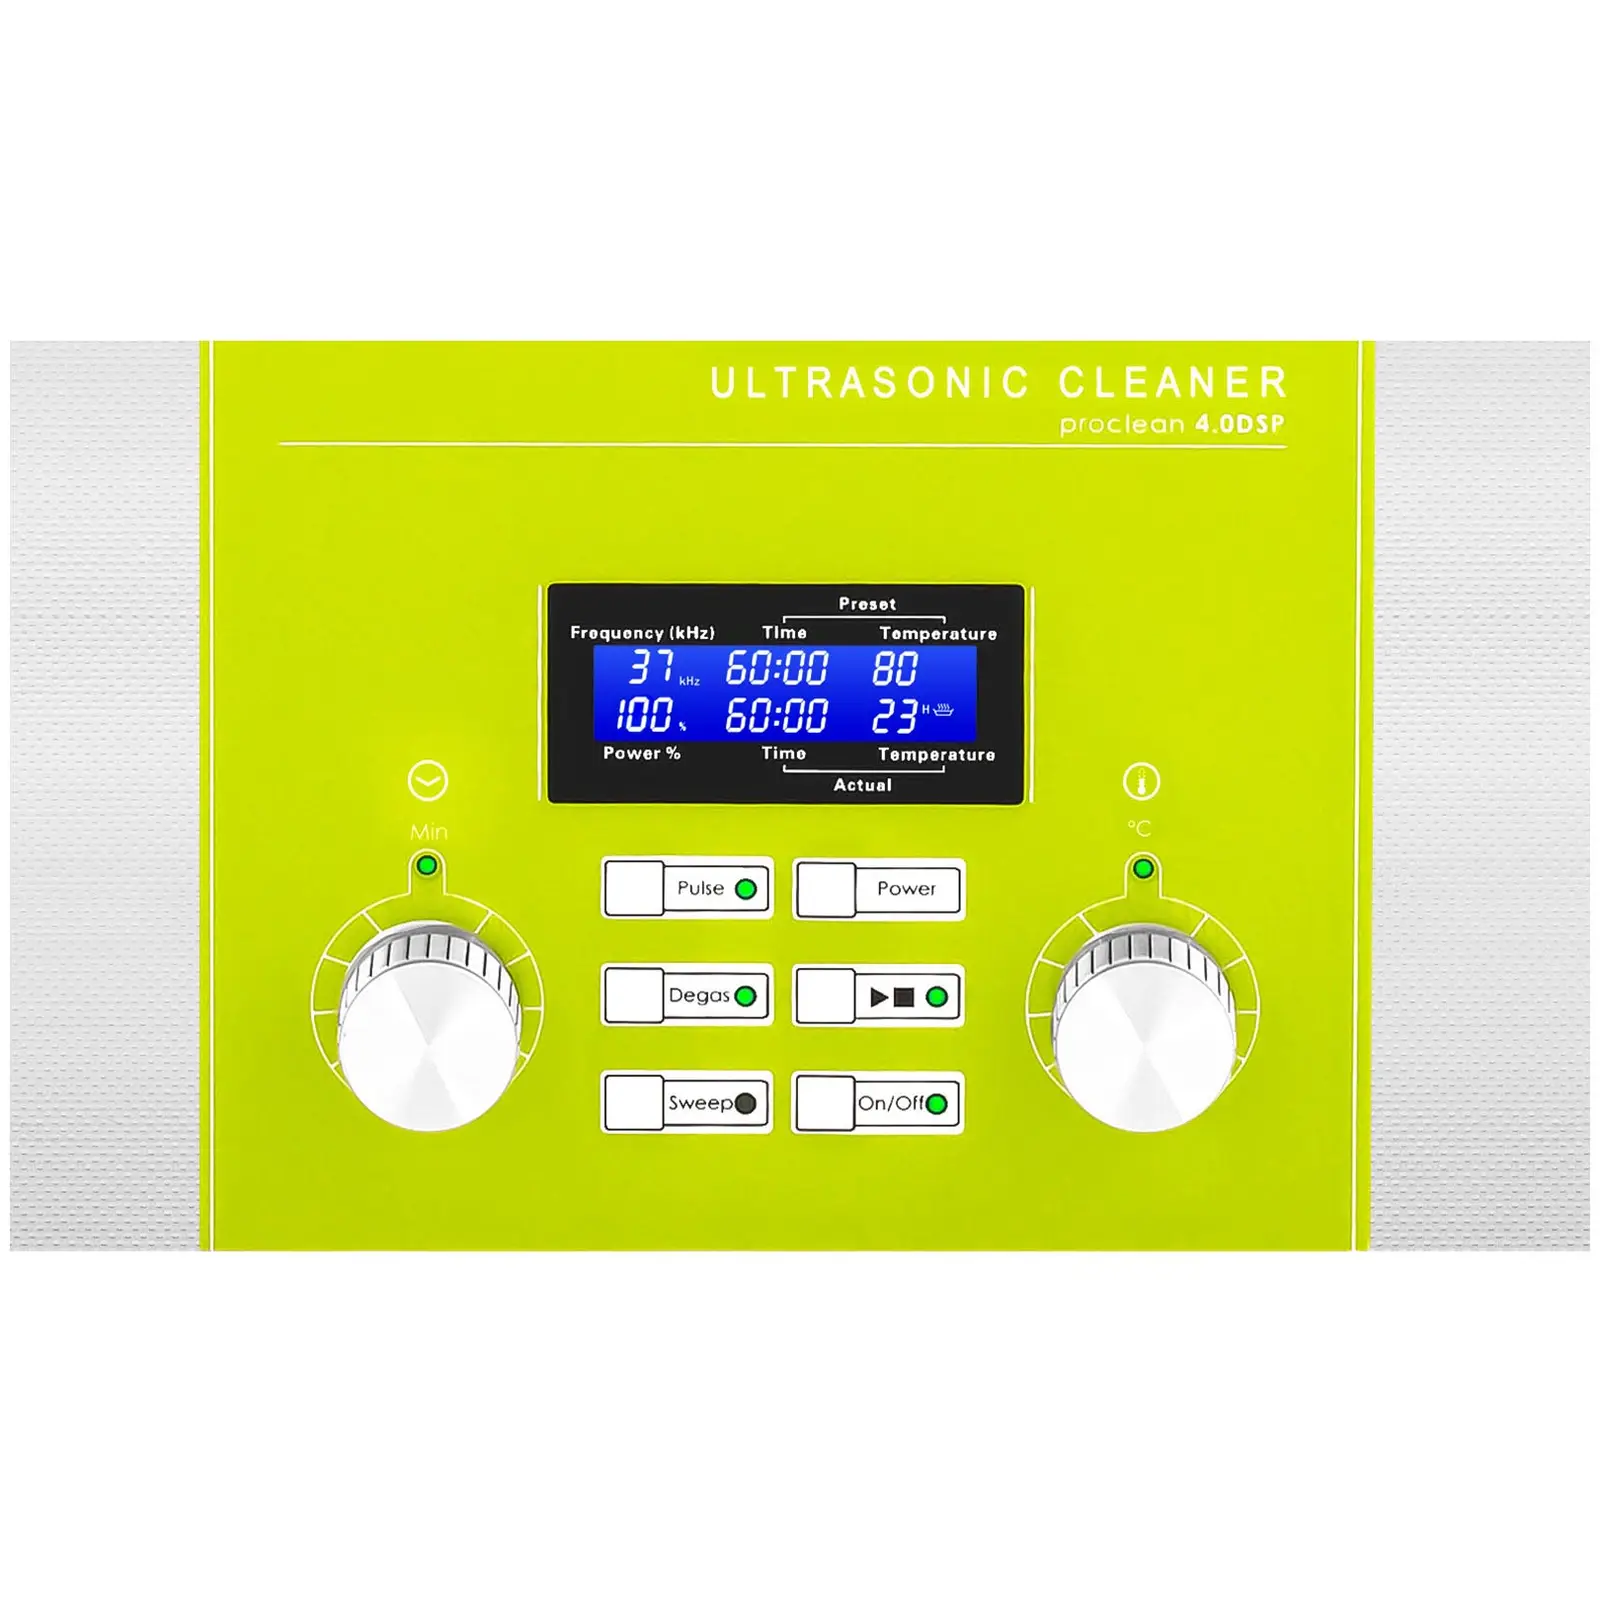 Ultrasonic Cleaner - 4 litres - degas - sweep - pulse